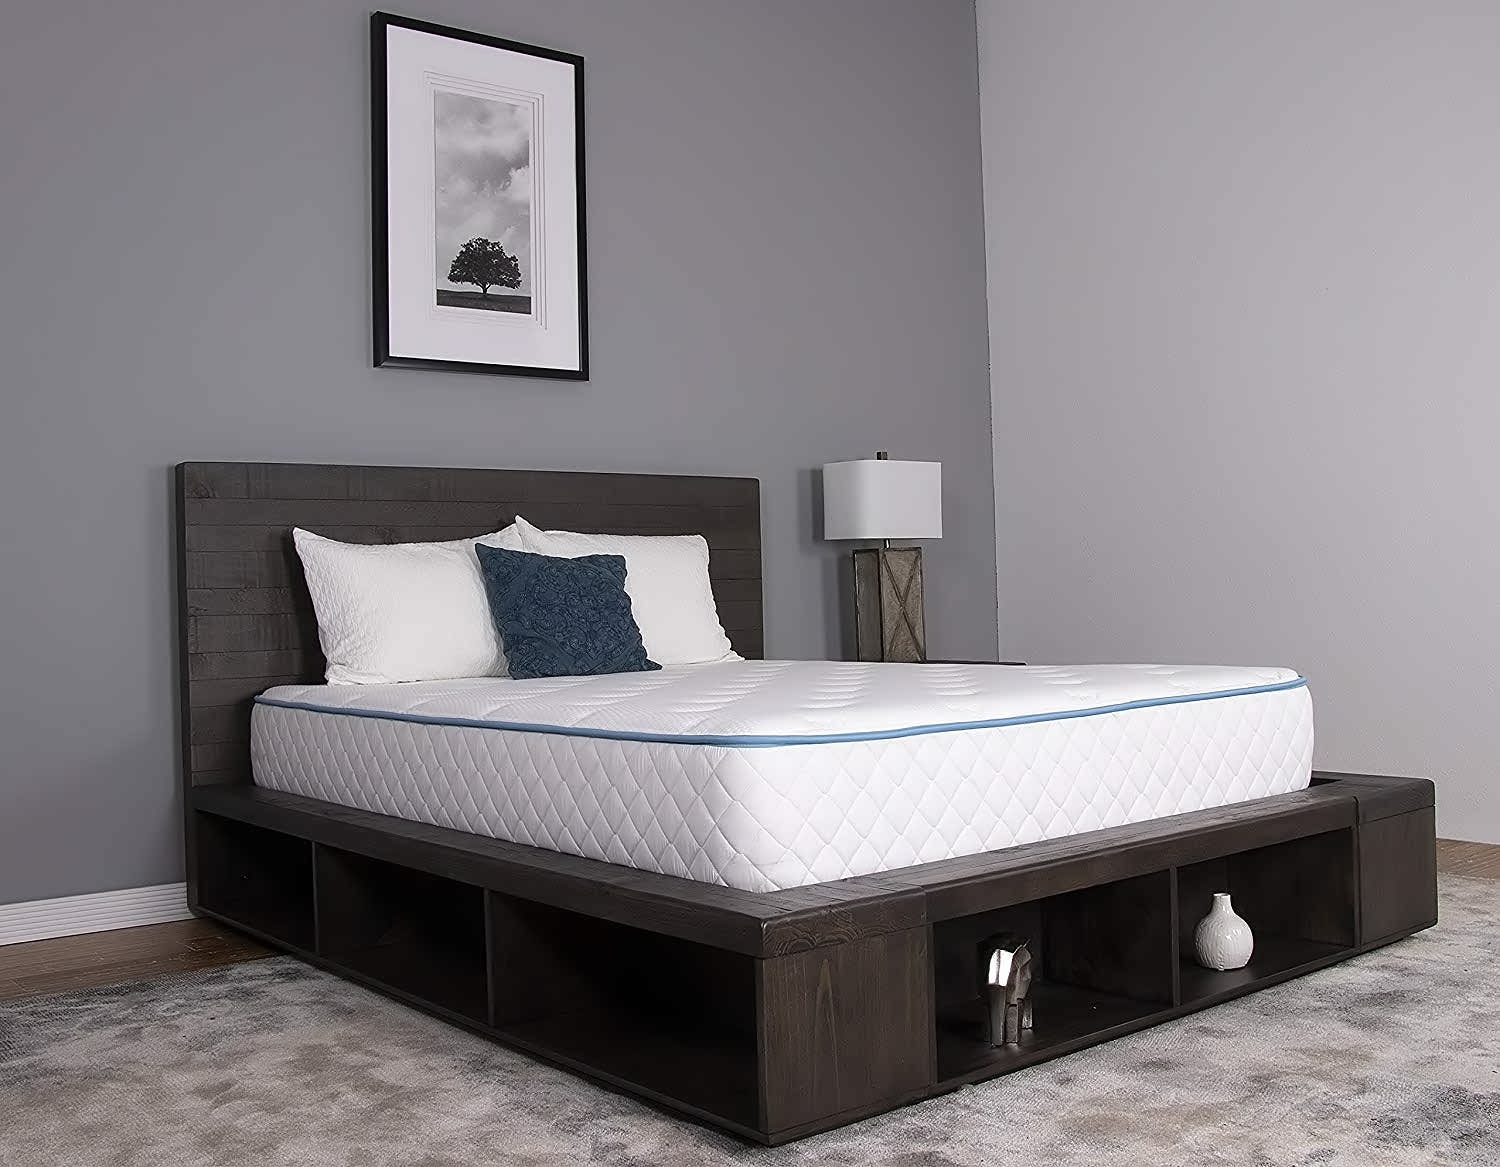 Dreamfoam bedding arctic dreams cooling gel mattress